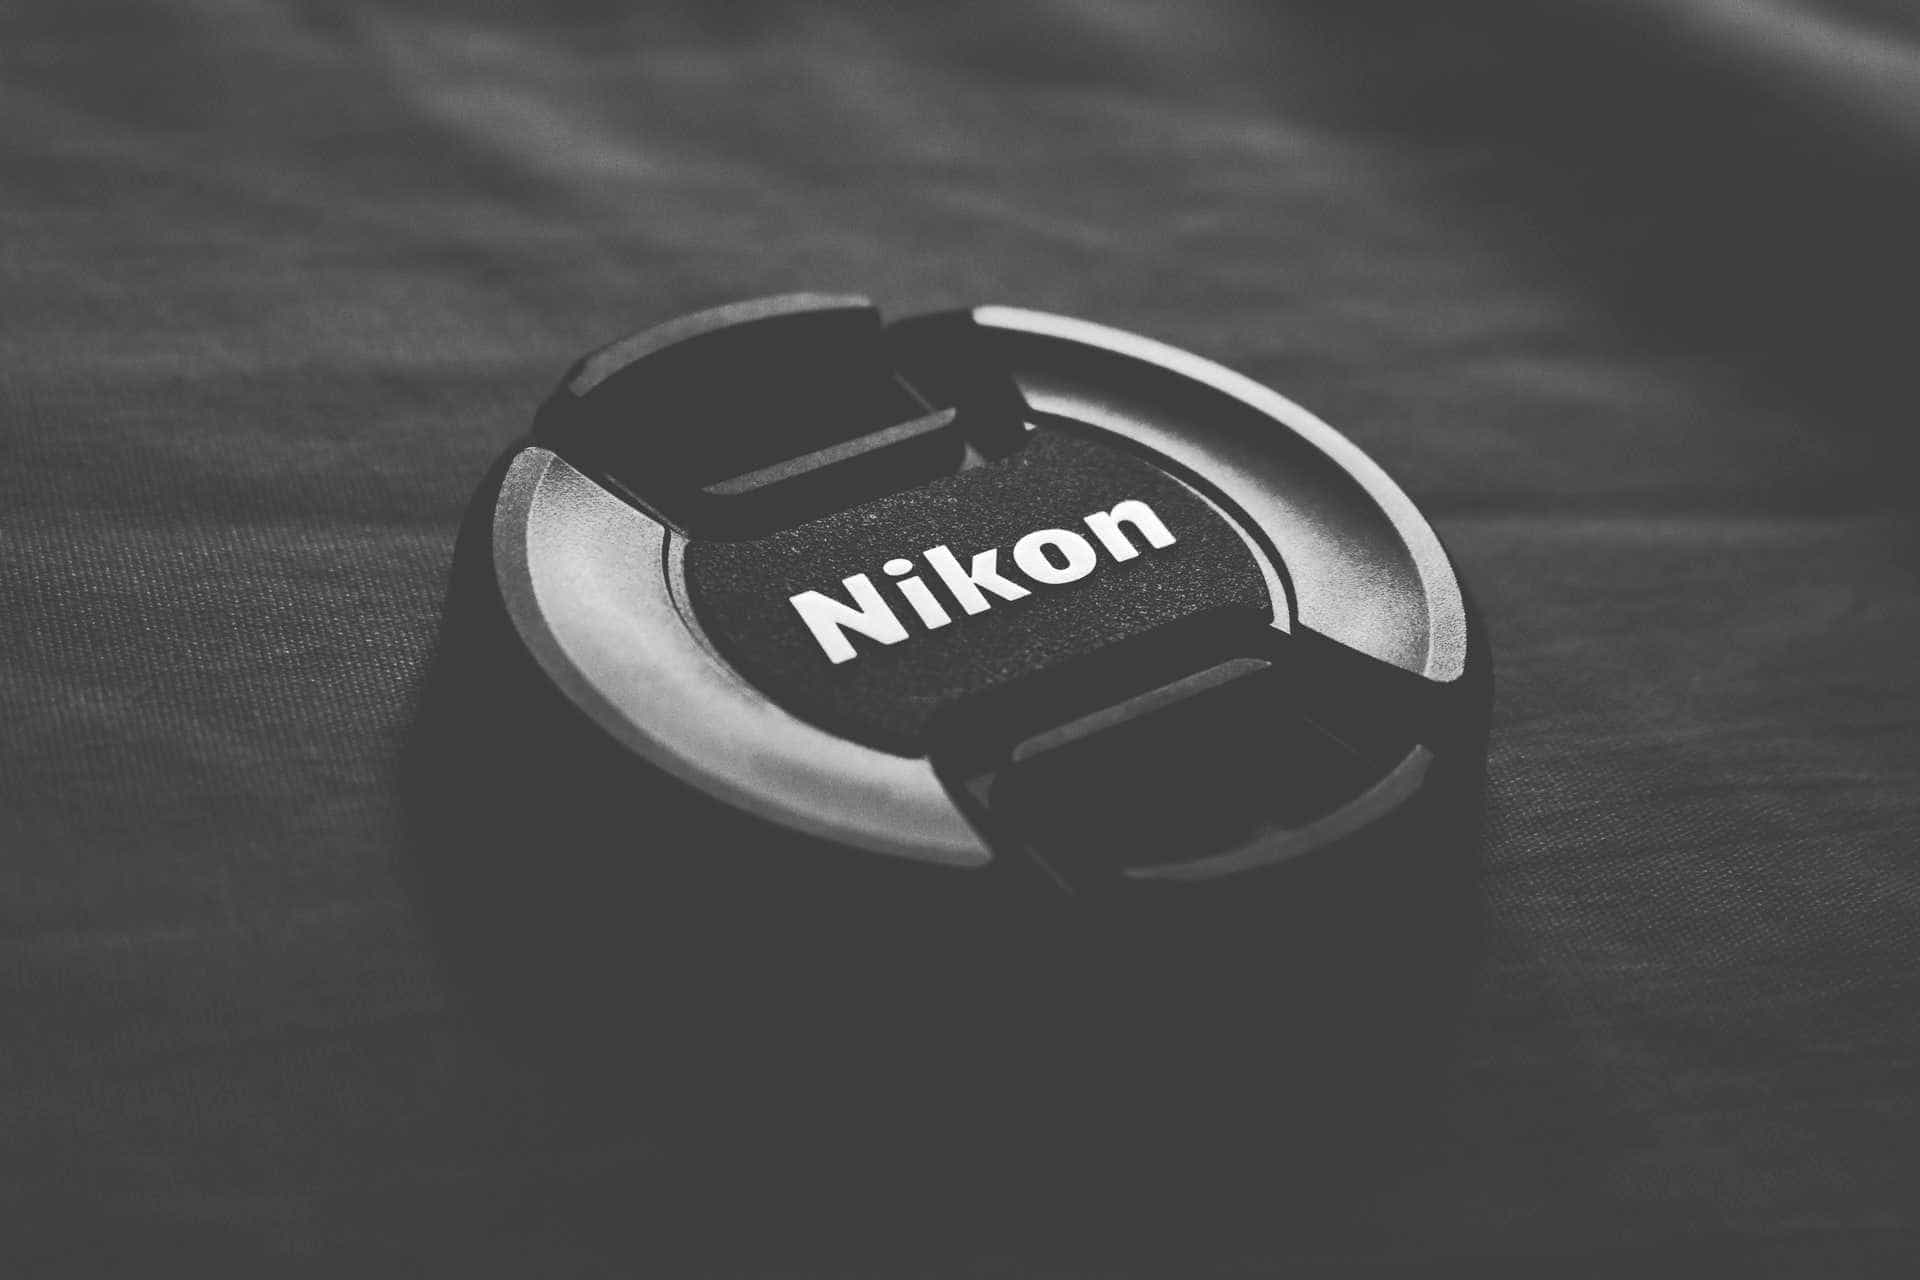 Nikon camera lid